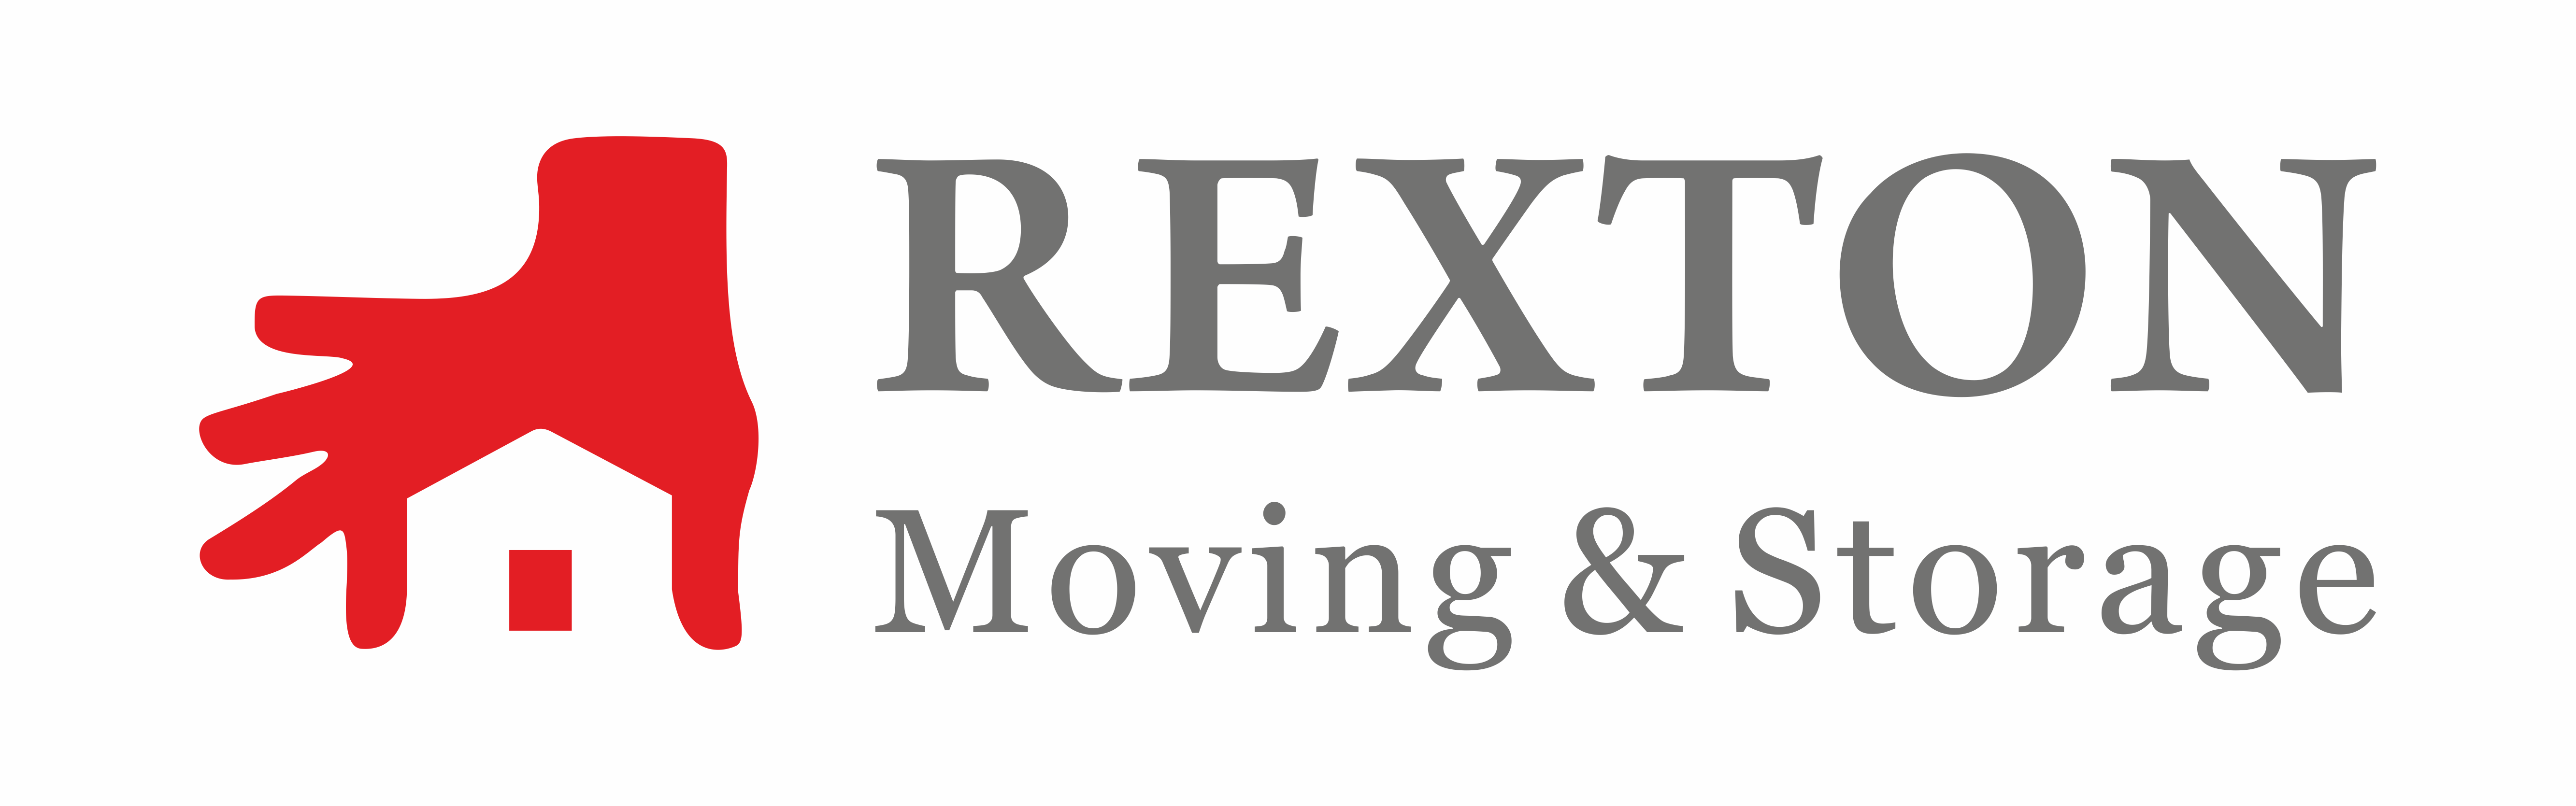 Rexton Moving